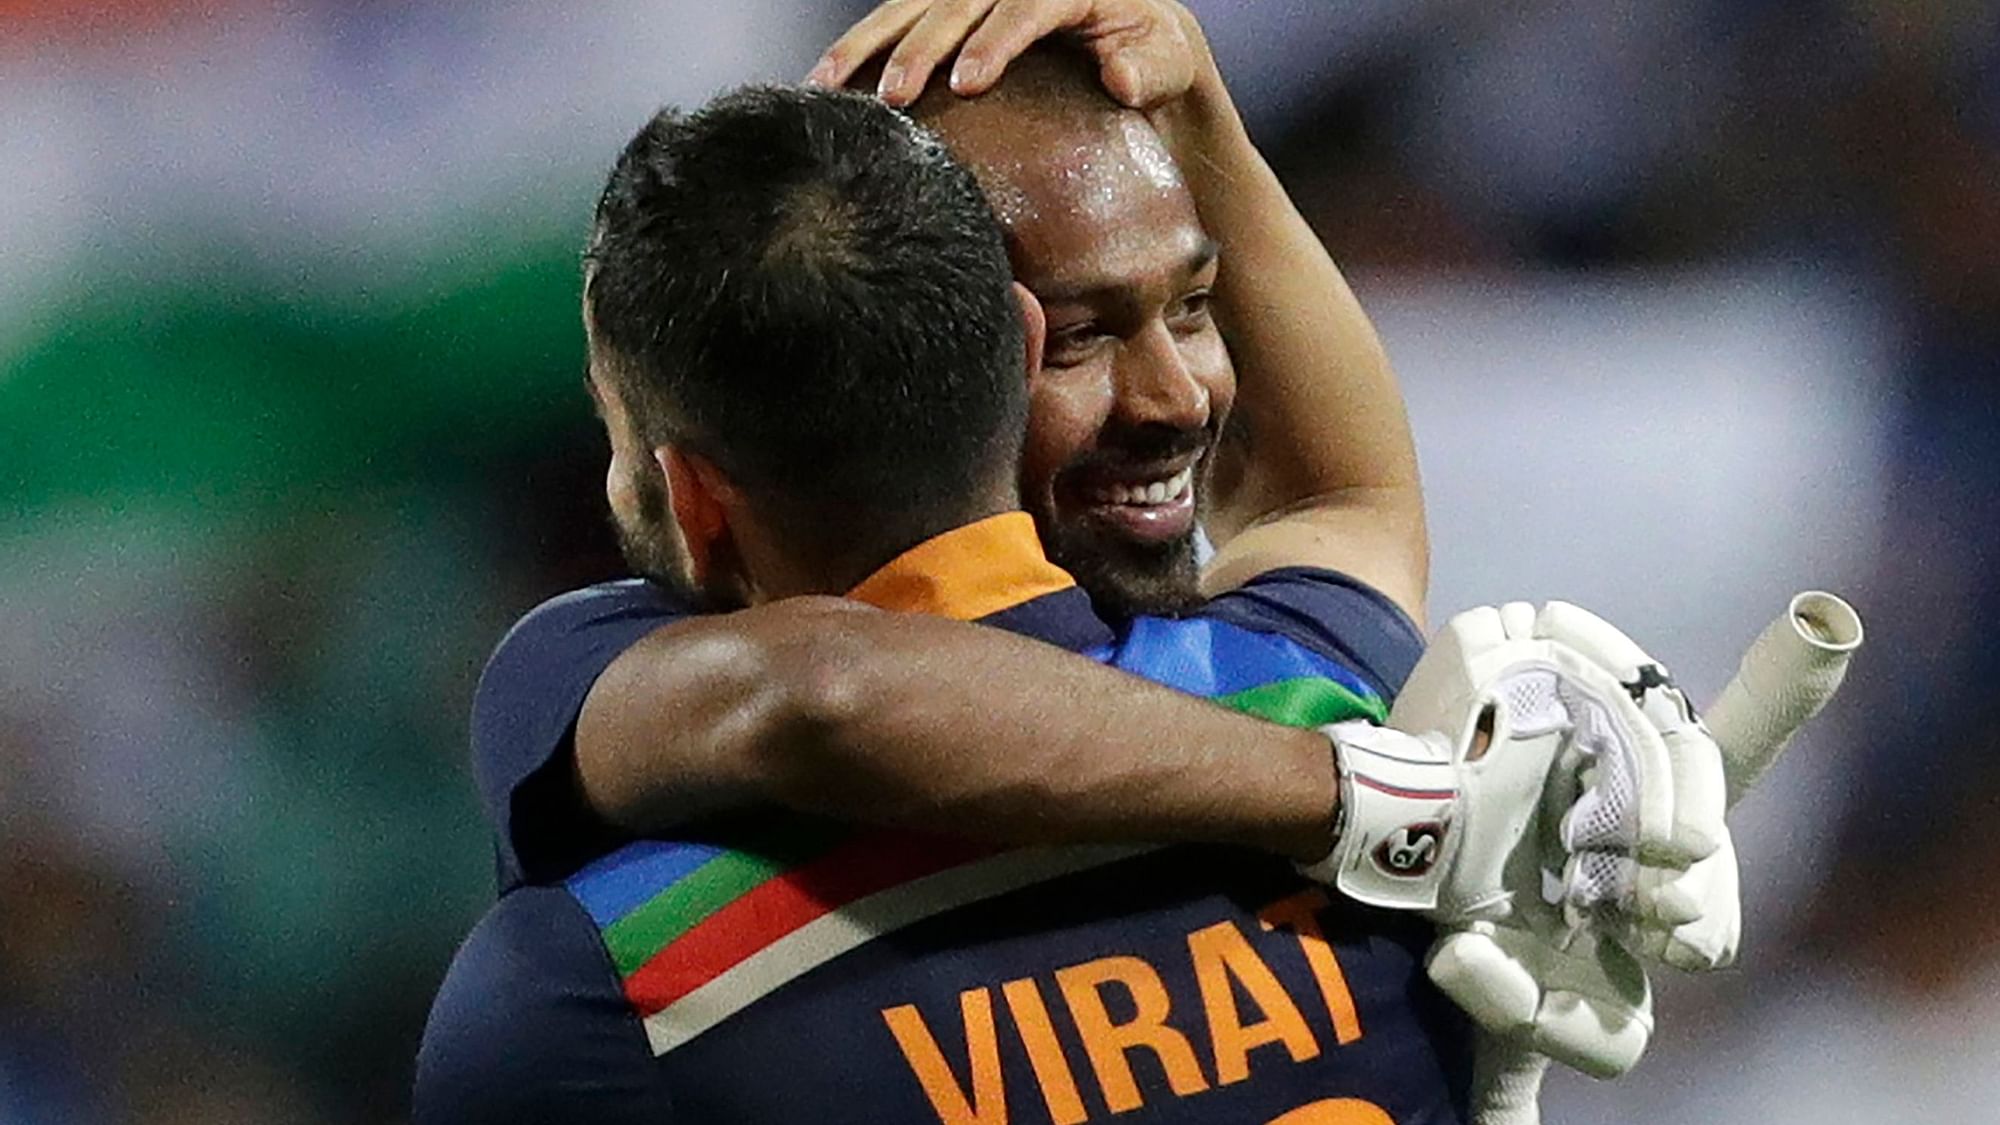 Virat Kohli was all praise for Hardik Pandya after the batter helped India win the T20I against Australia on Sunday.